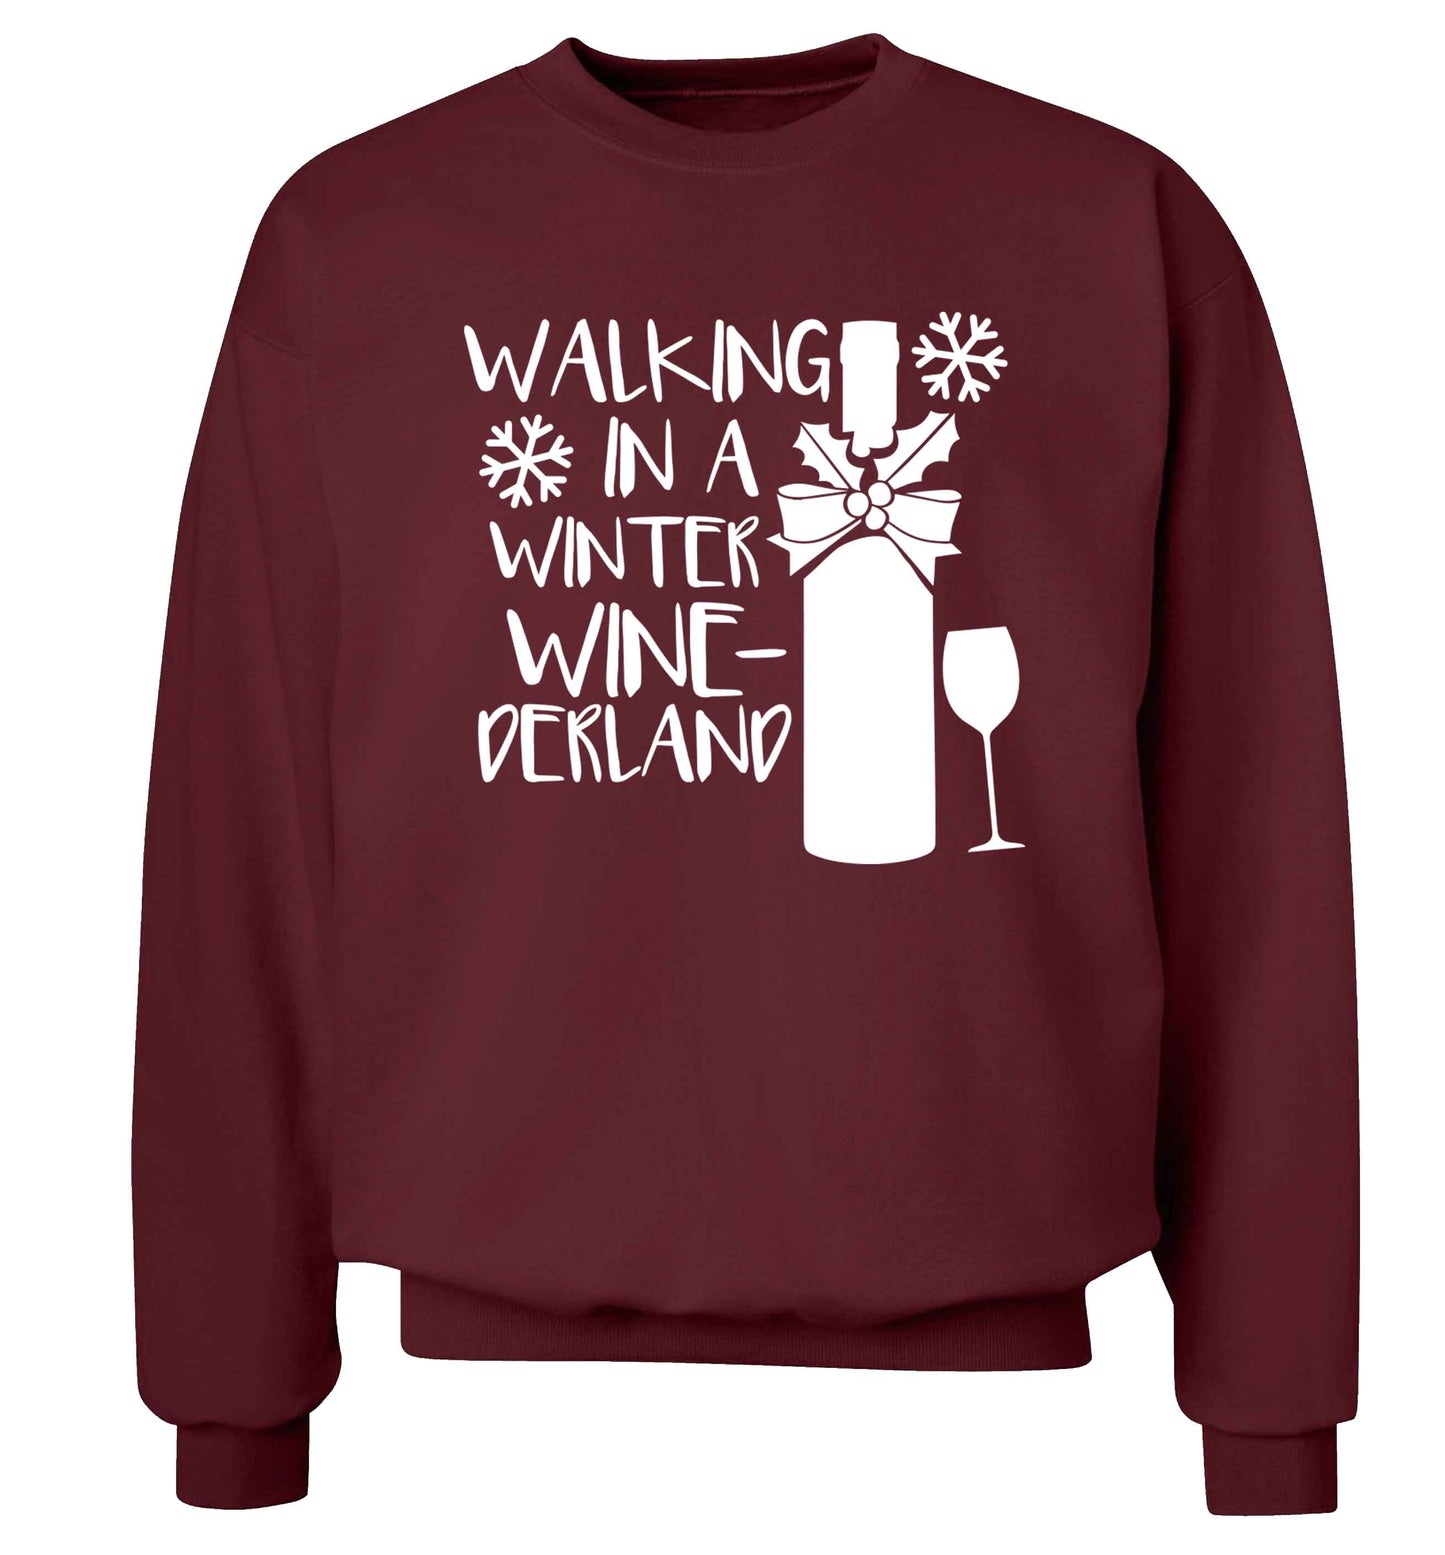 Walking in a wine-derwonderland Adult's unisex maroon Sweater 2XL